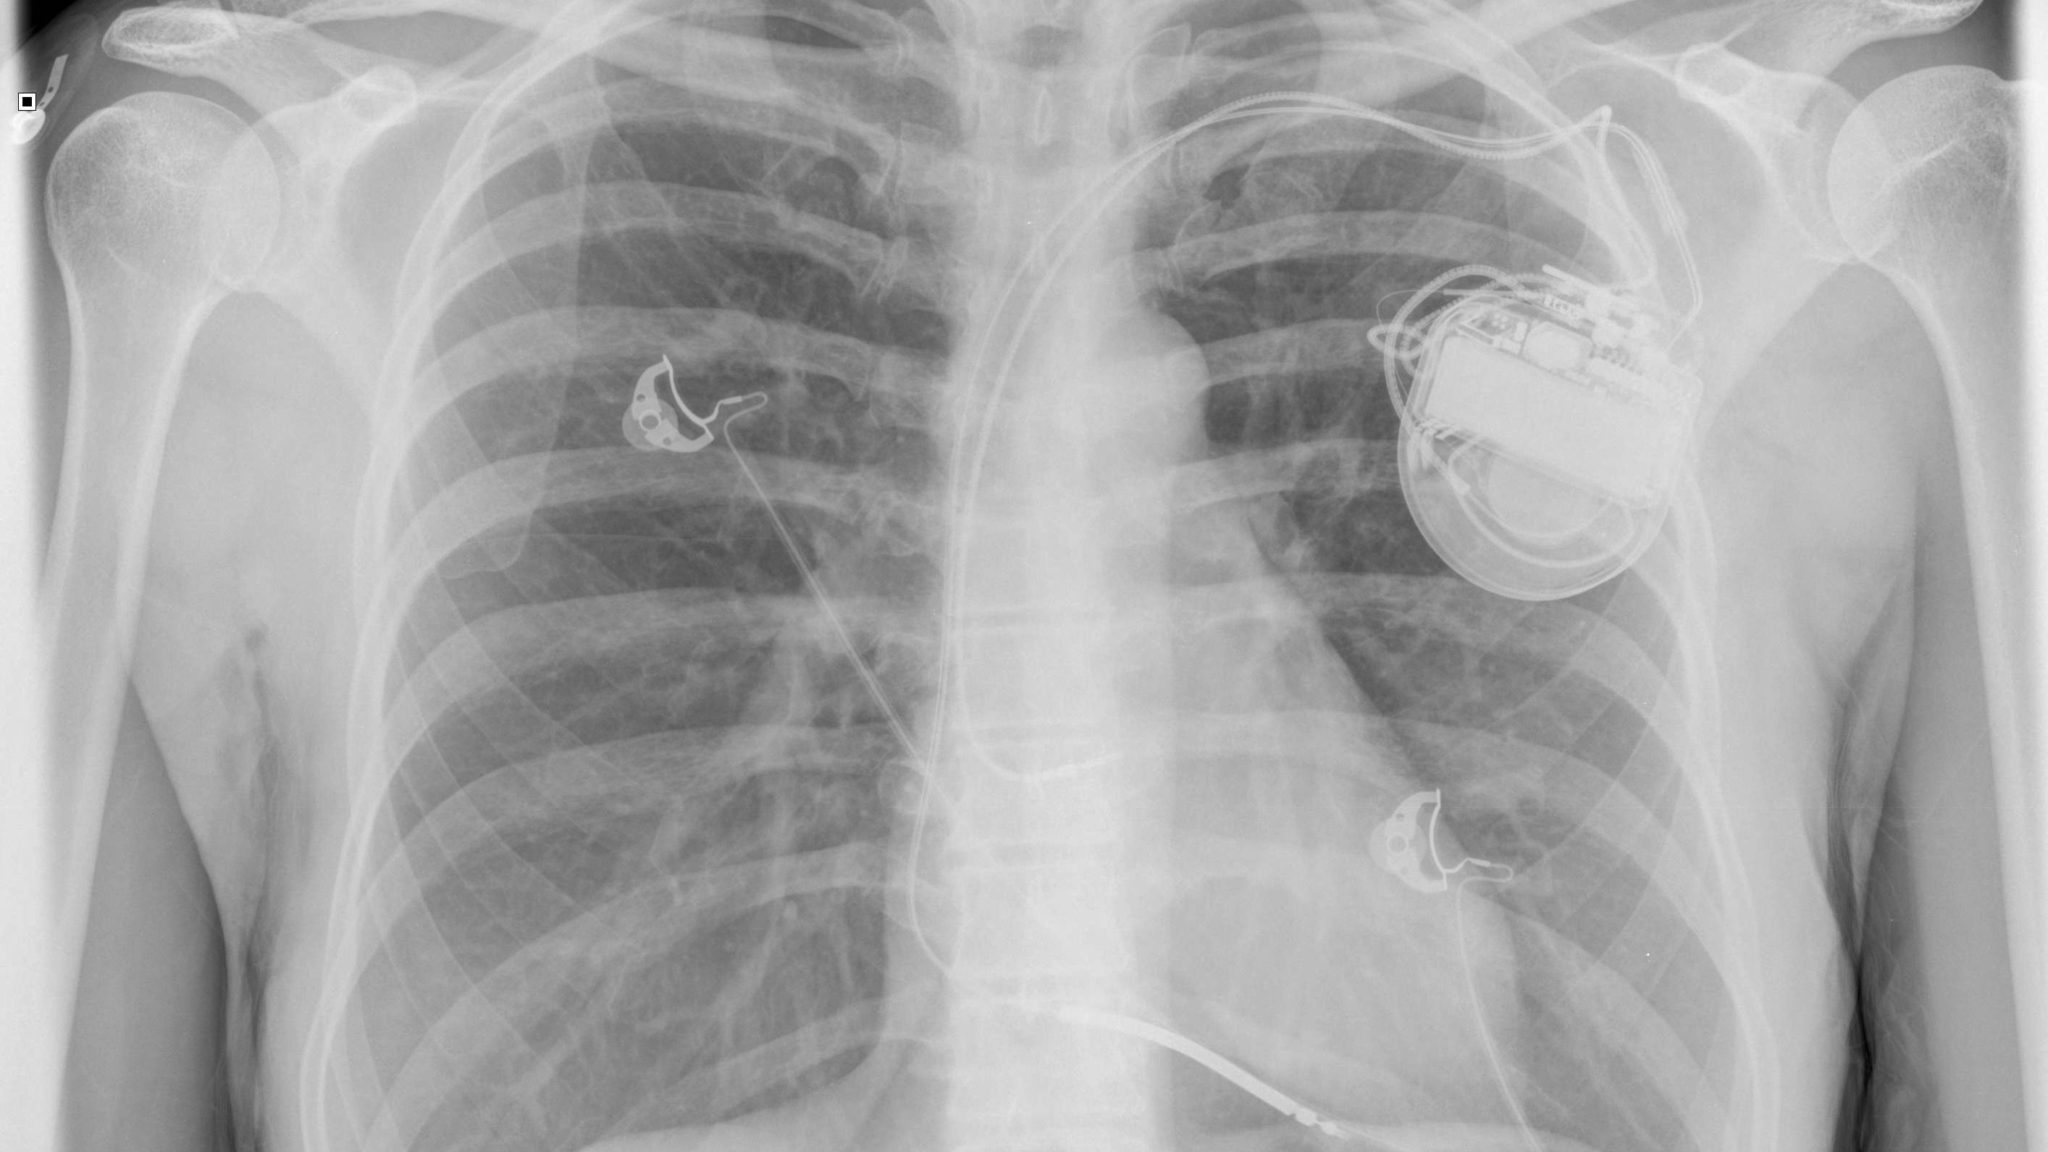 Chest x-ray showing an implantable cardiac defibrillator.